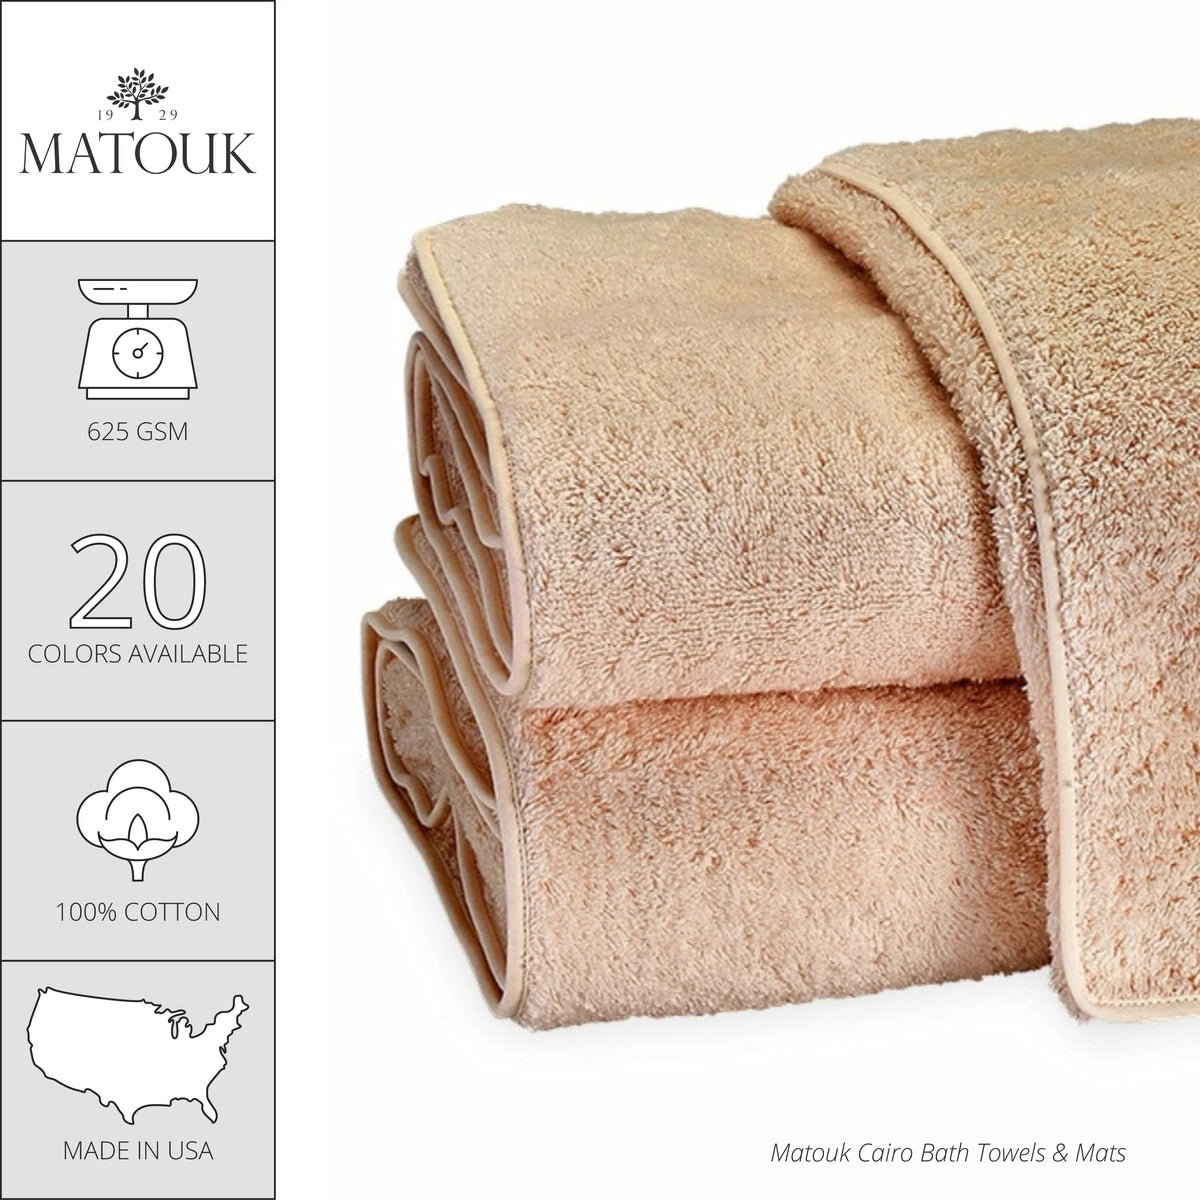 Matouk Cairo Bath Towels and Mats - White/Sea